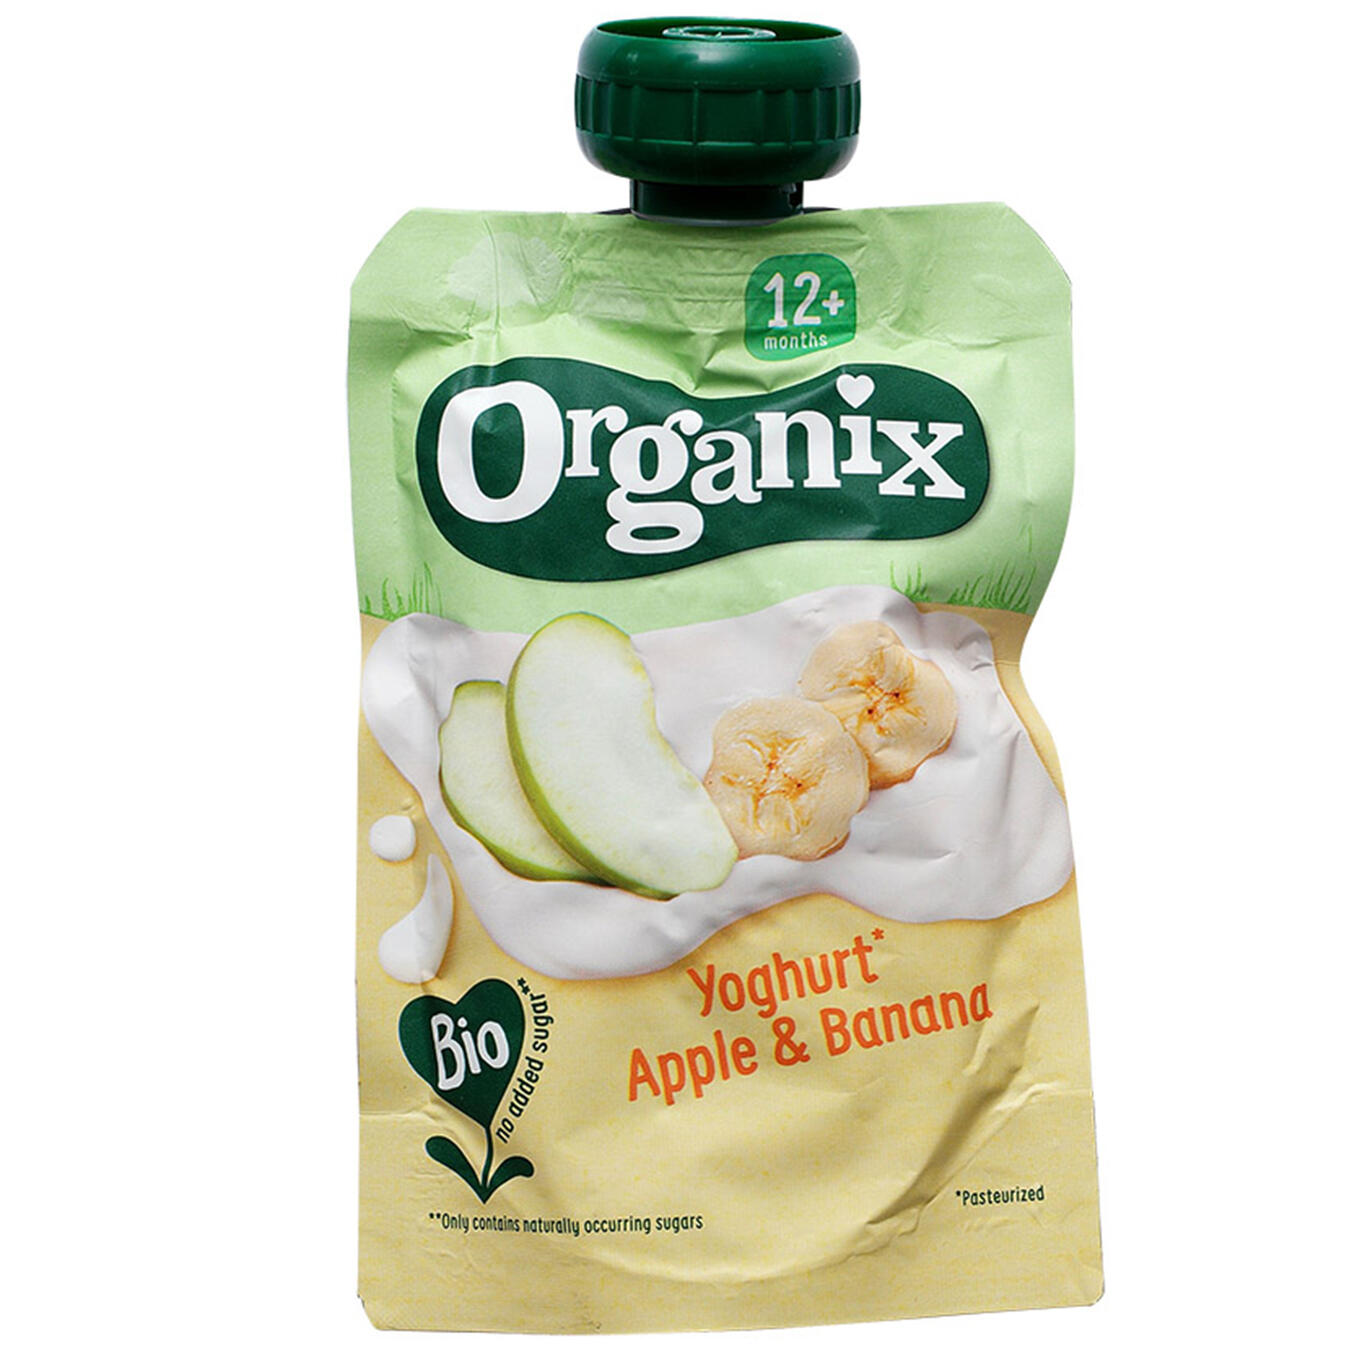 Yoghurt, Apple & Banana Organix